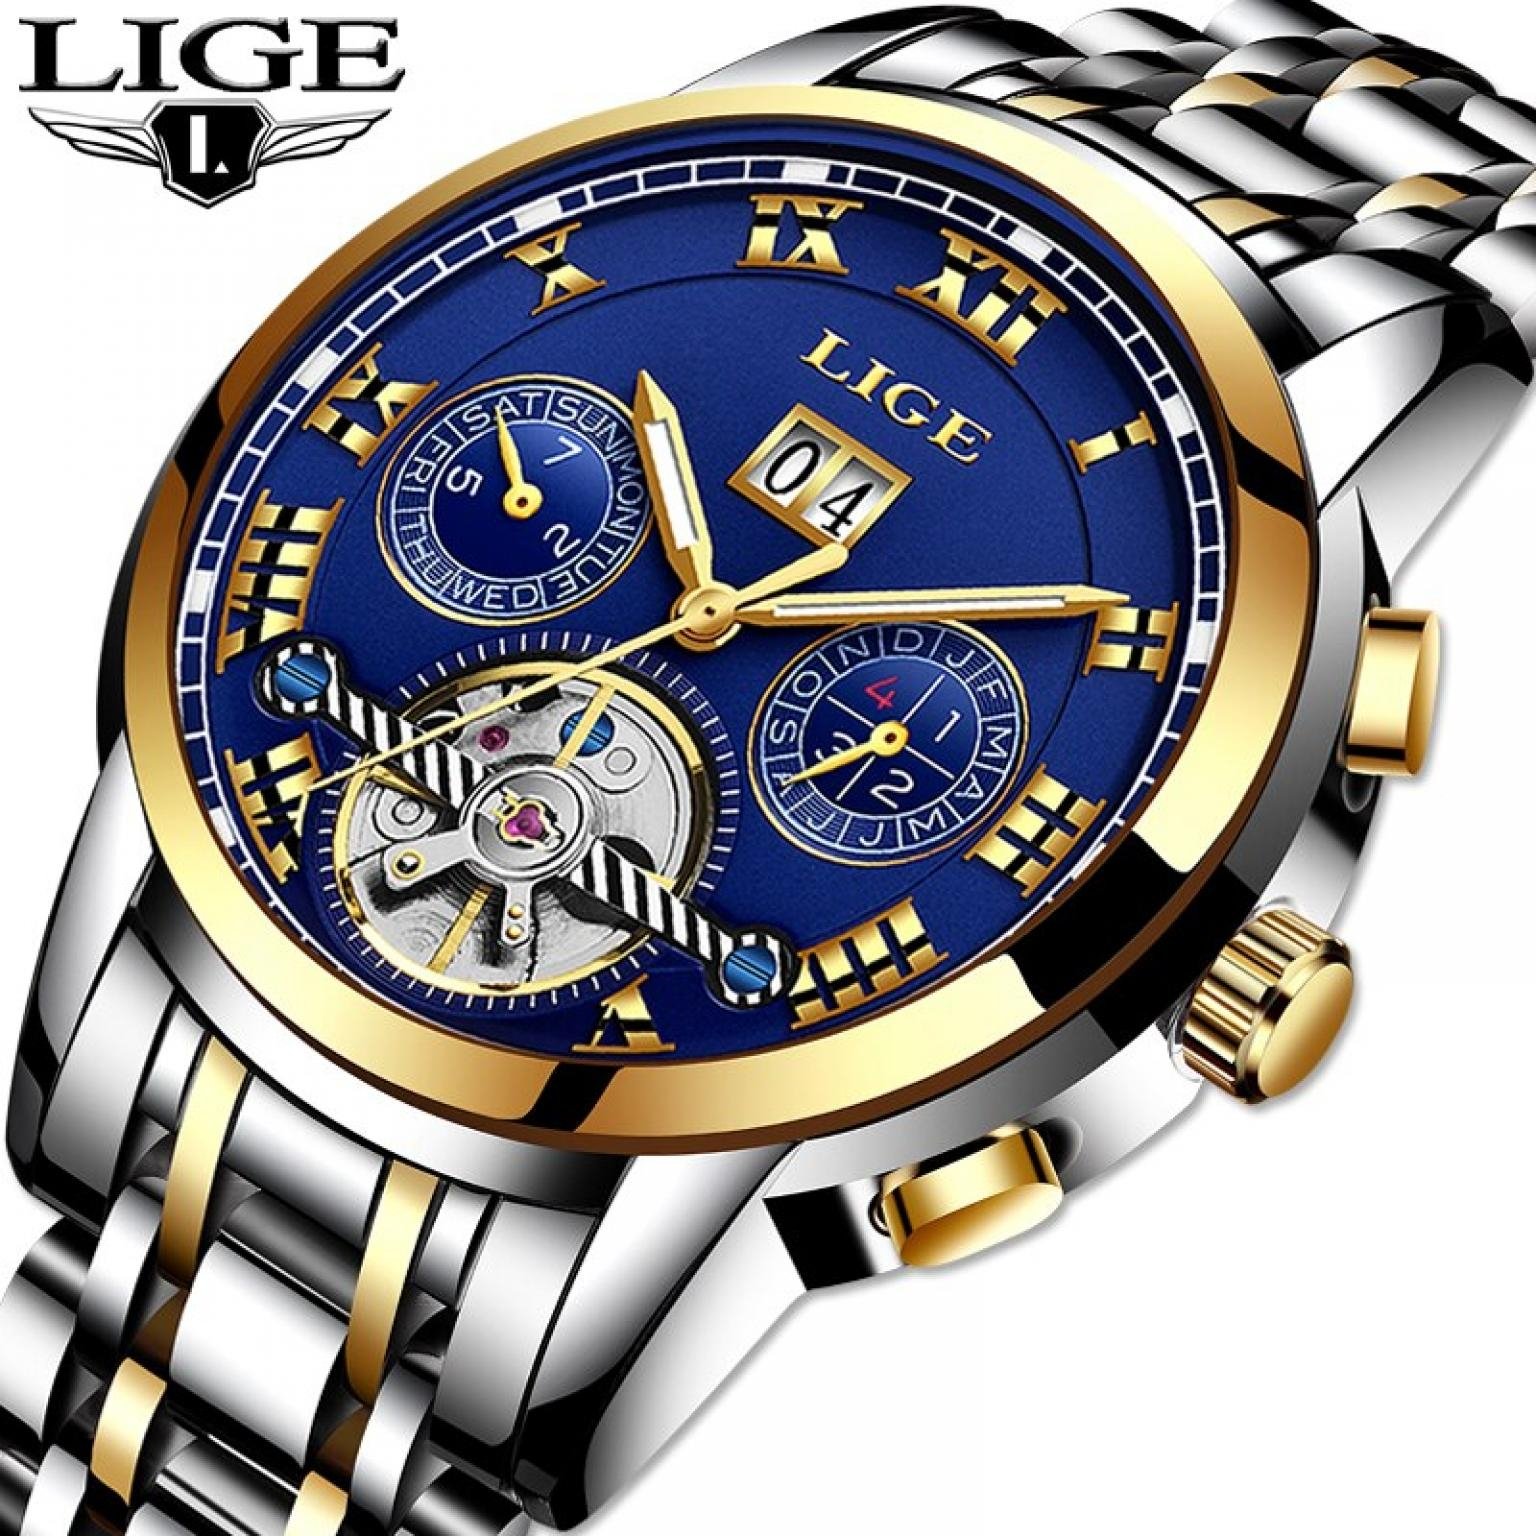 New LIGE Original Brand Watch Men Top Luxury Automatic Mechanical Watch Men Stainless Steel Clock Business Watches 9861